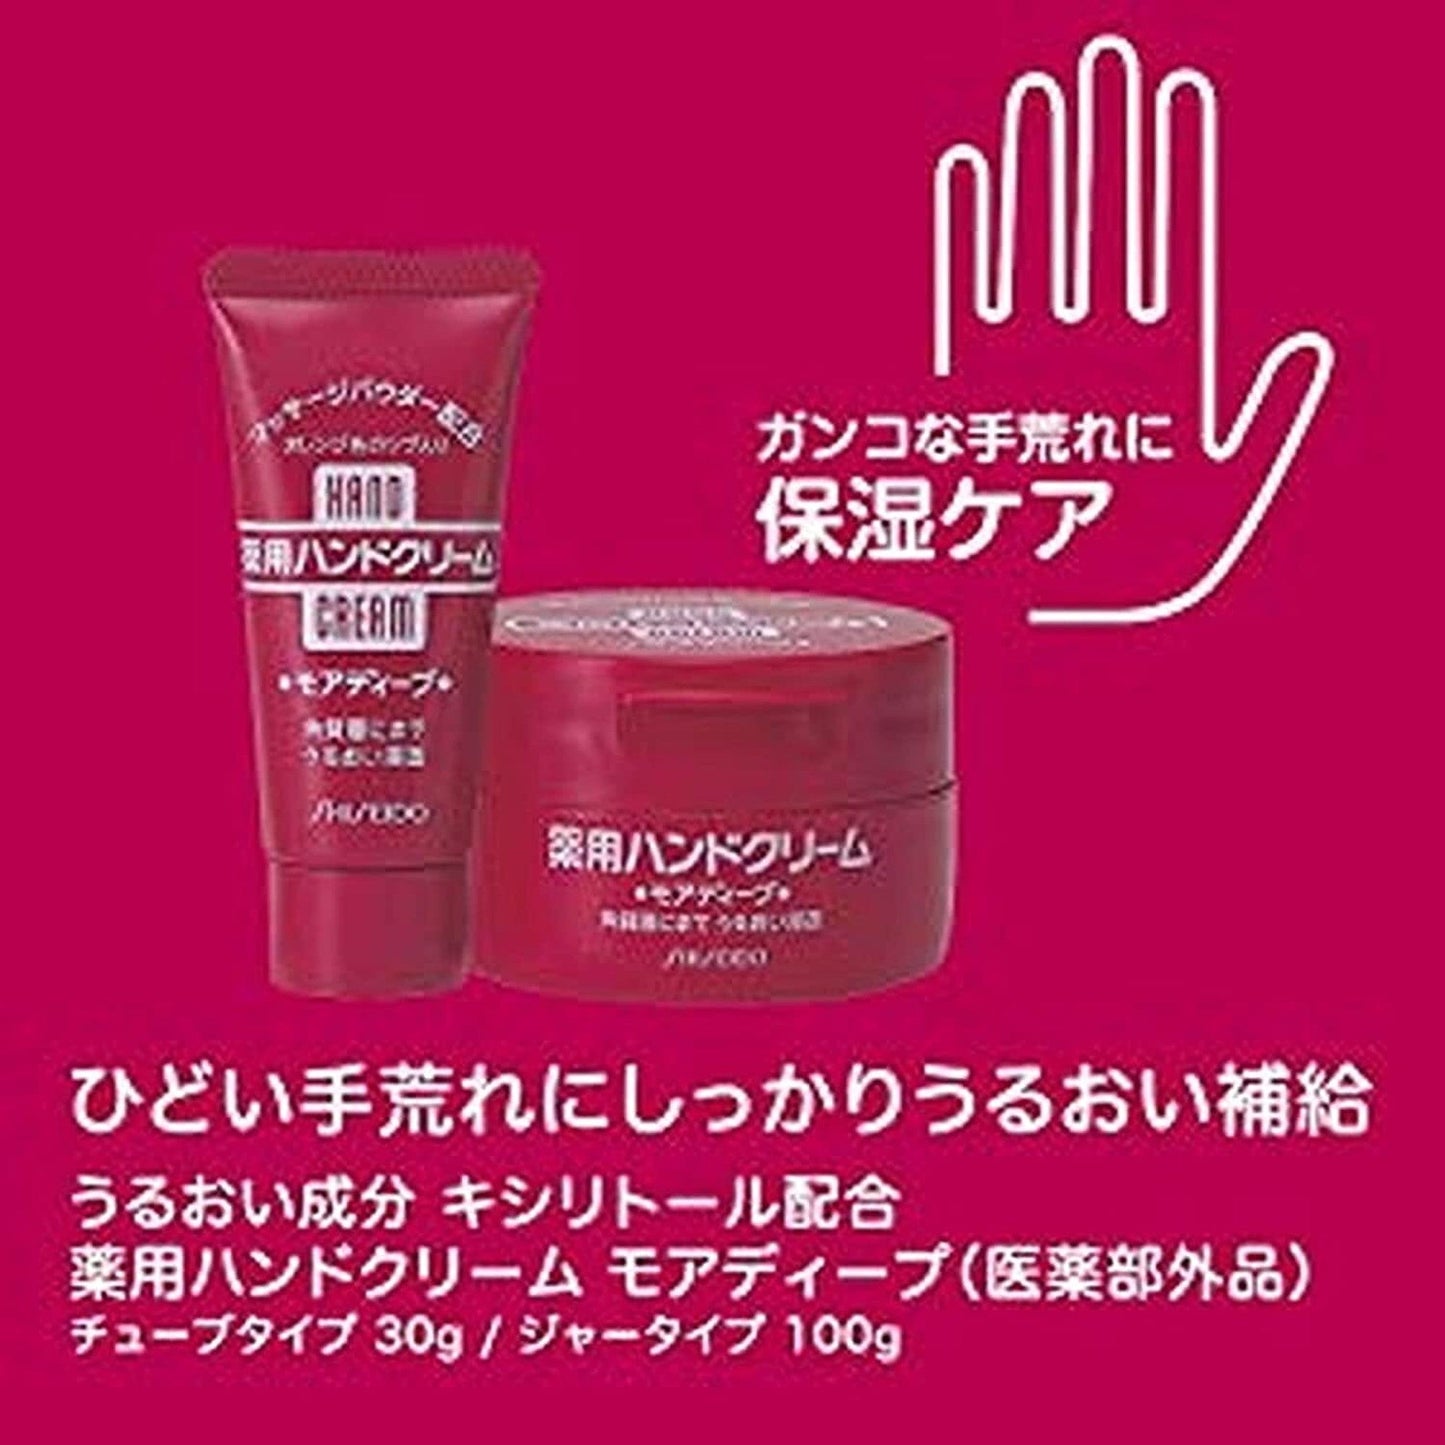 Shiseido Medicated Hand Cream More Deep Jar 100g JAN: 49325263